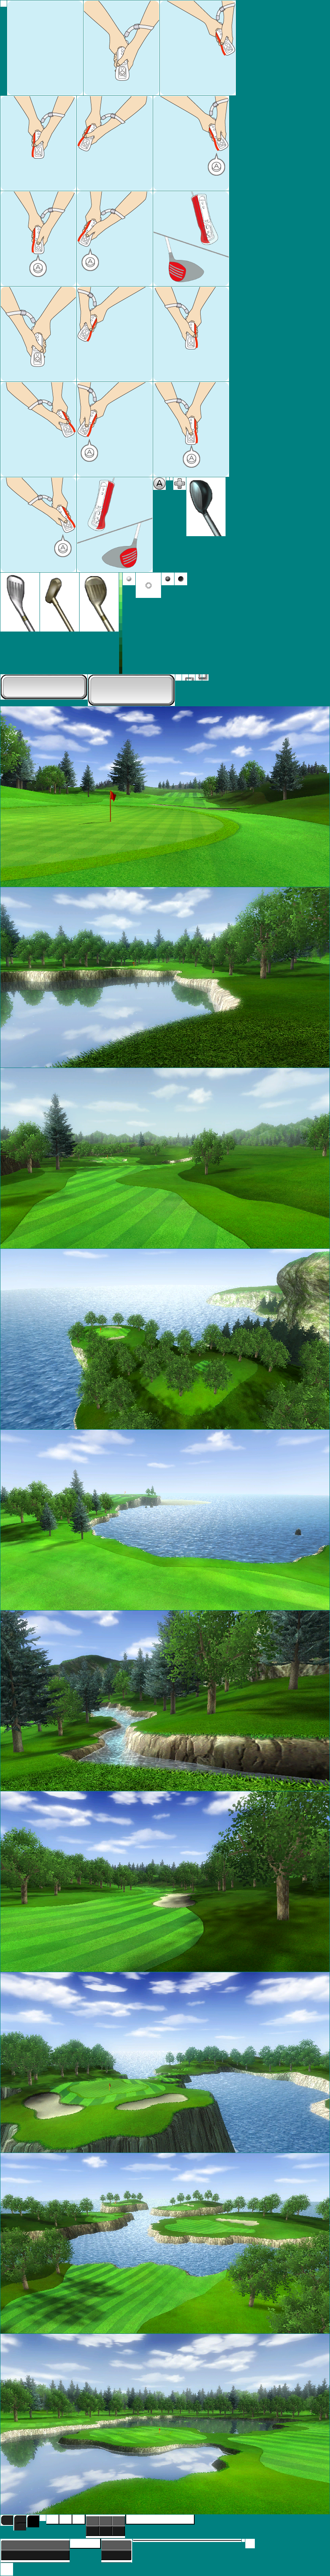 Wii Sports - Golf